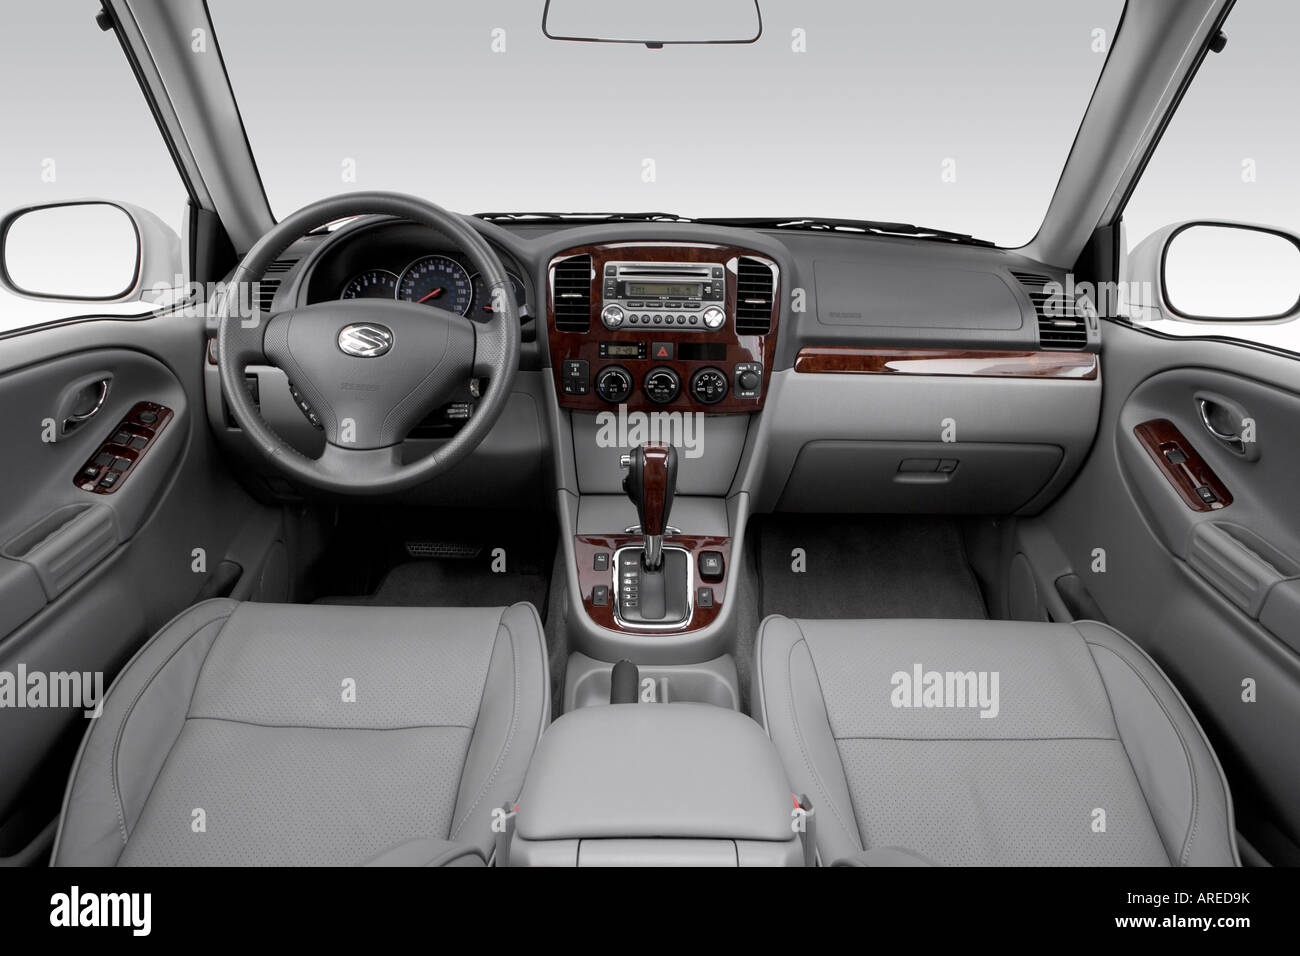 2006 Suzuki XL7 Premium in Silver - Dashboard, center console, gear shifter  view Stock Photo - Alamy